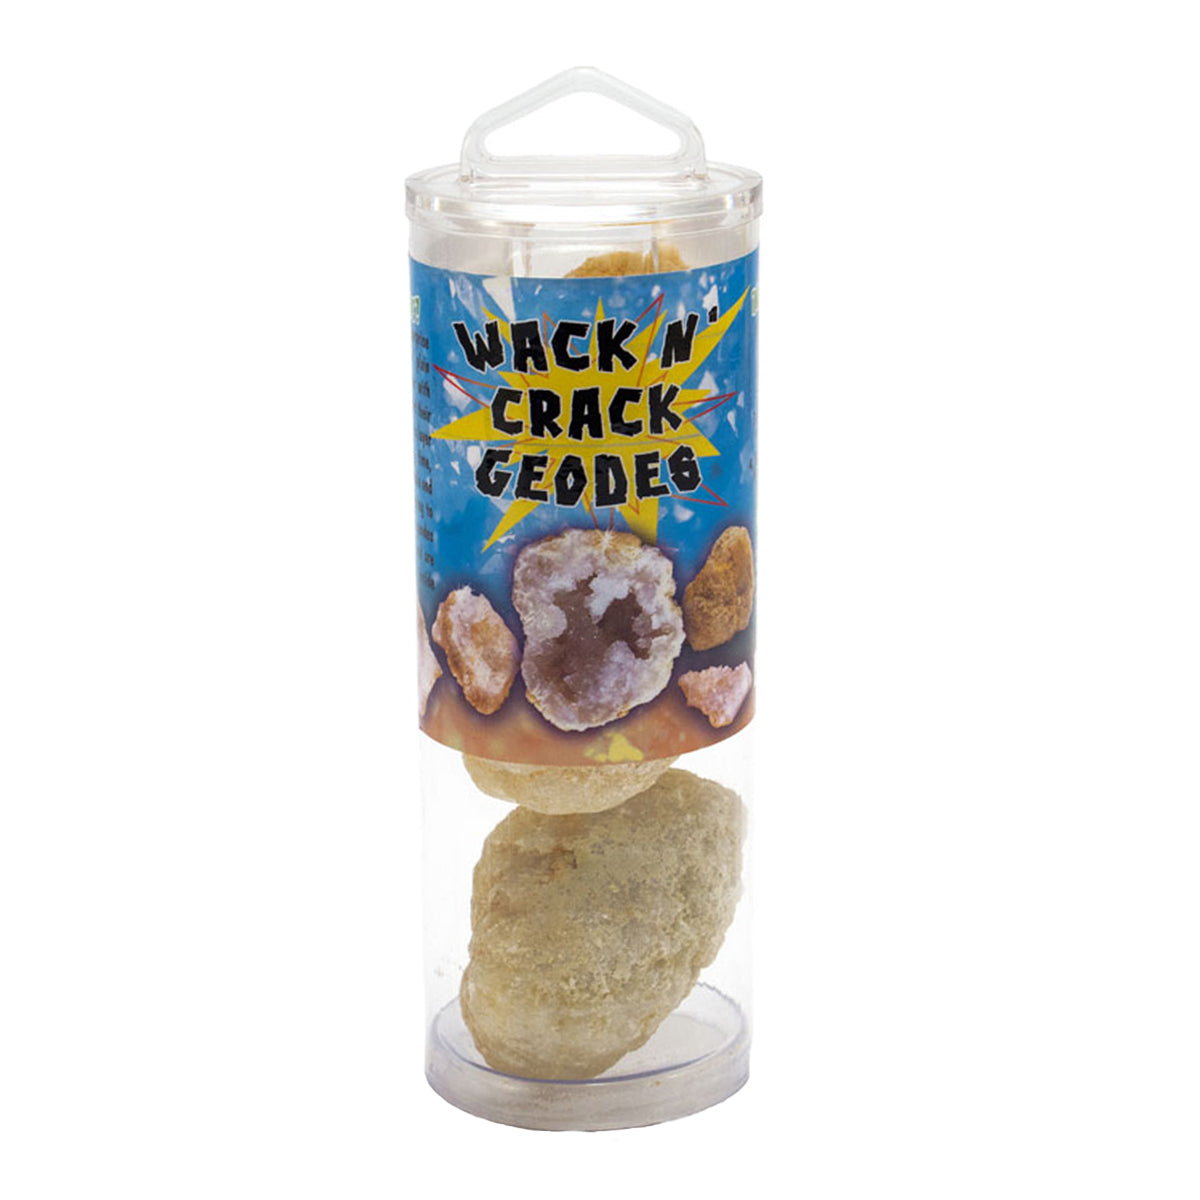 Wack n' Crack Geodes